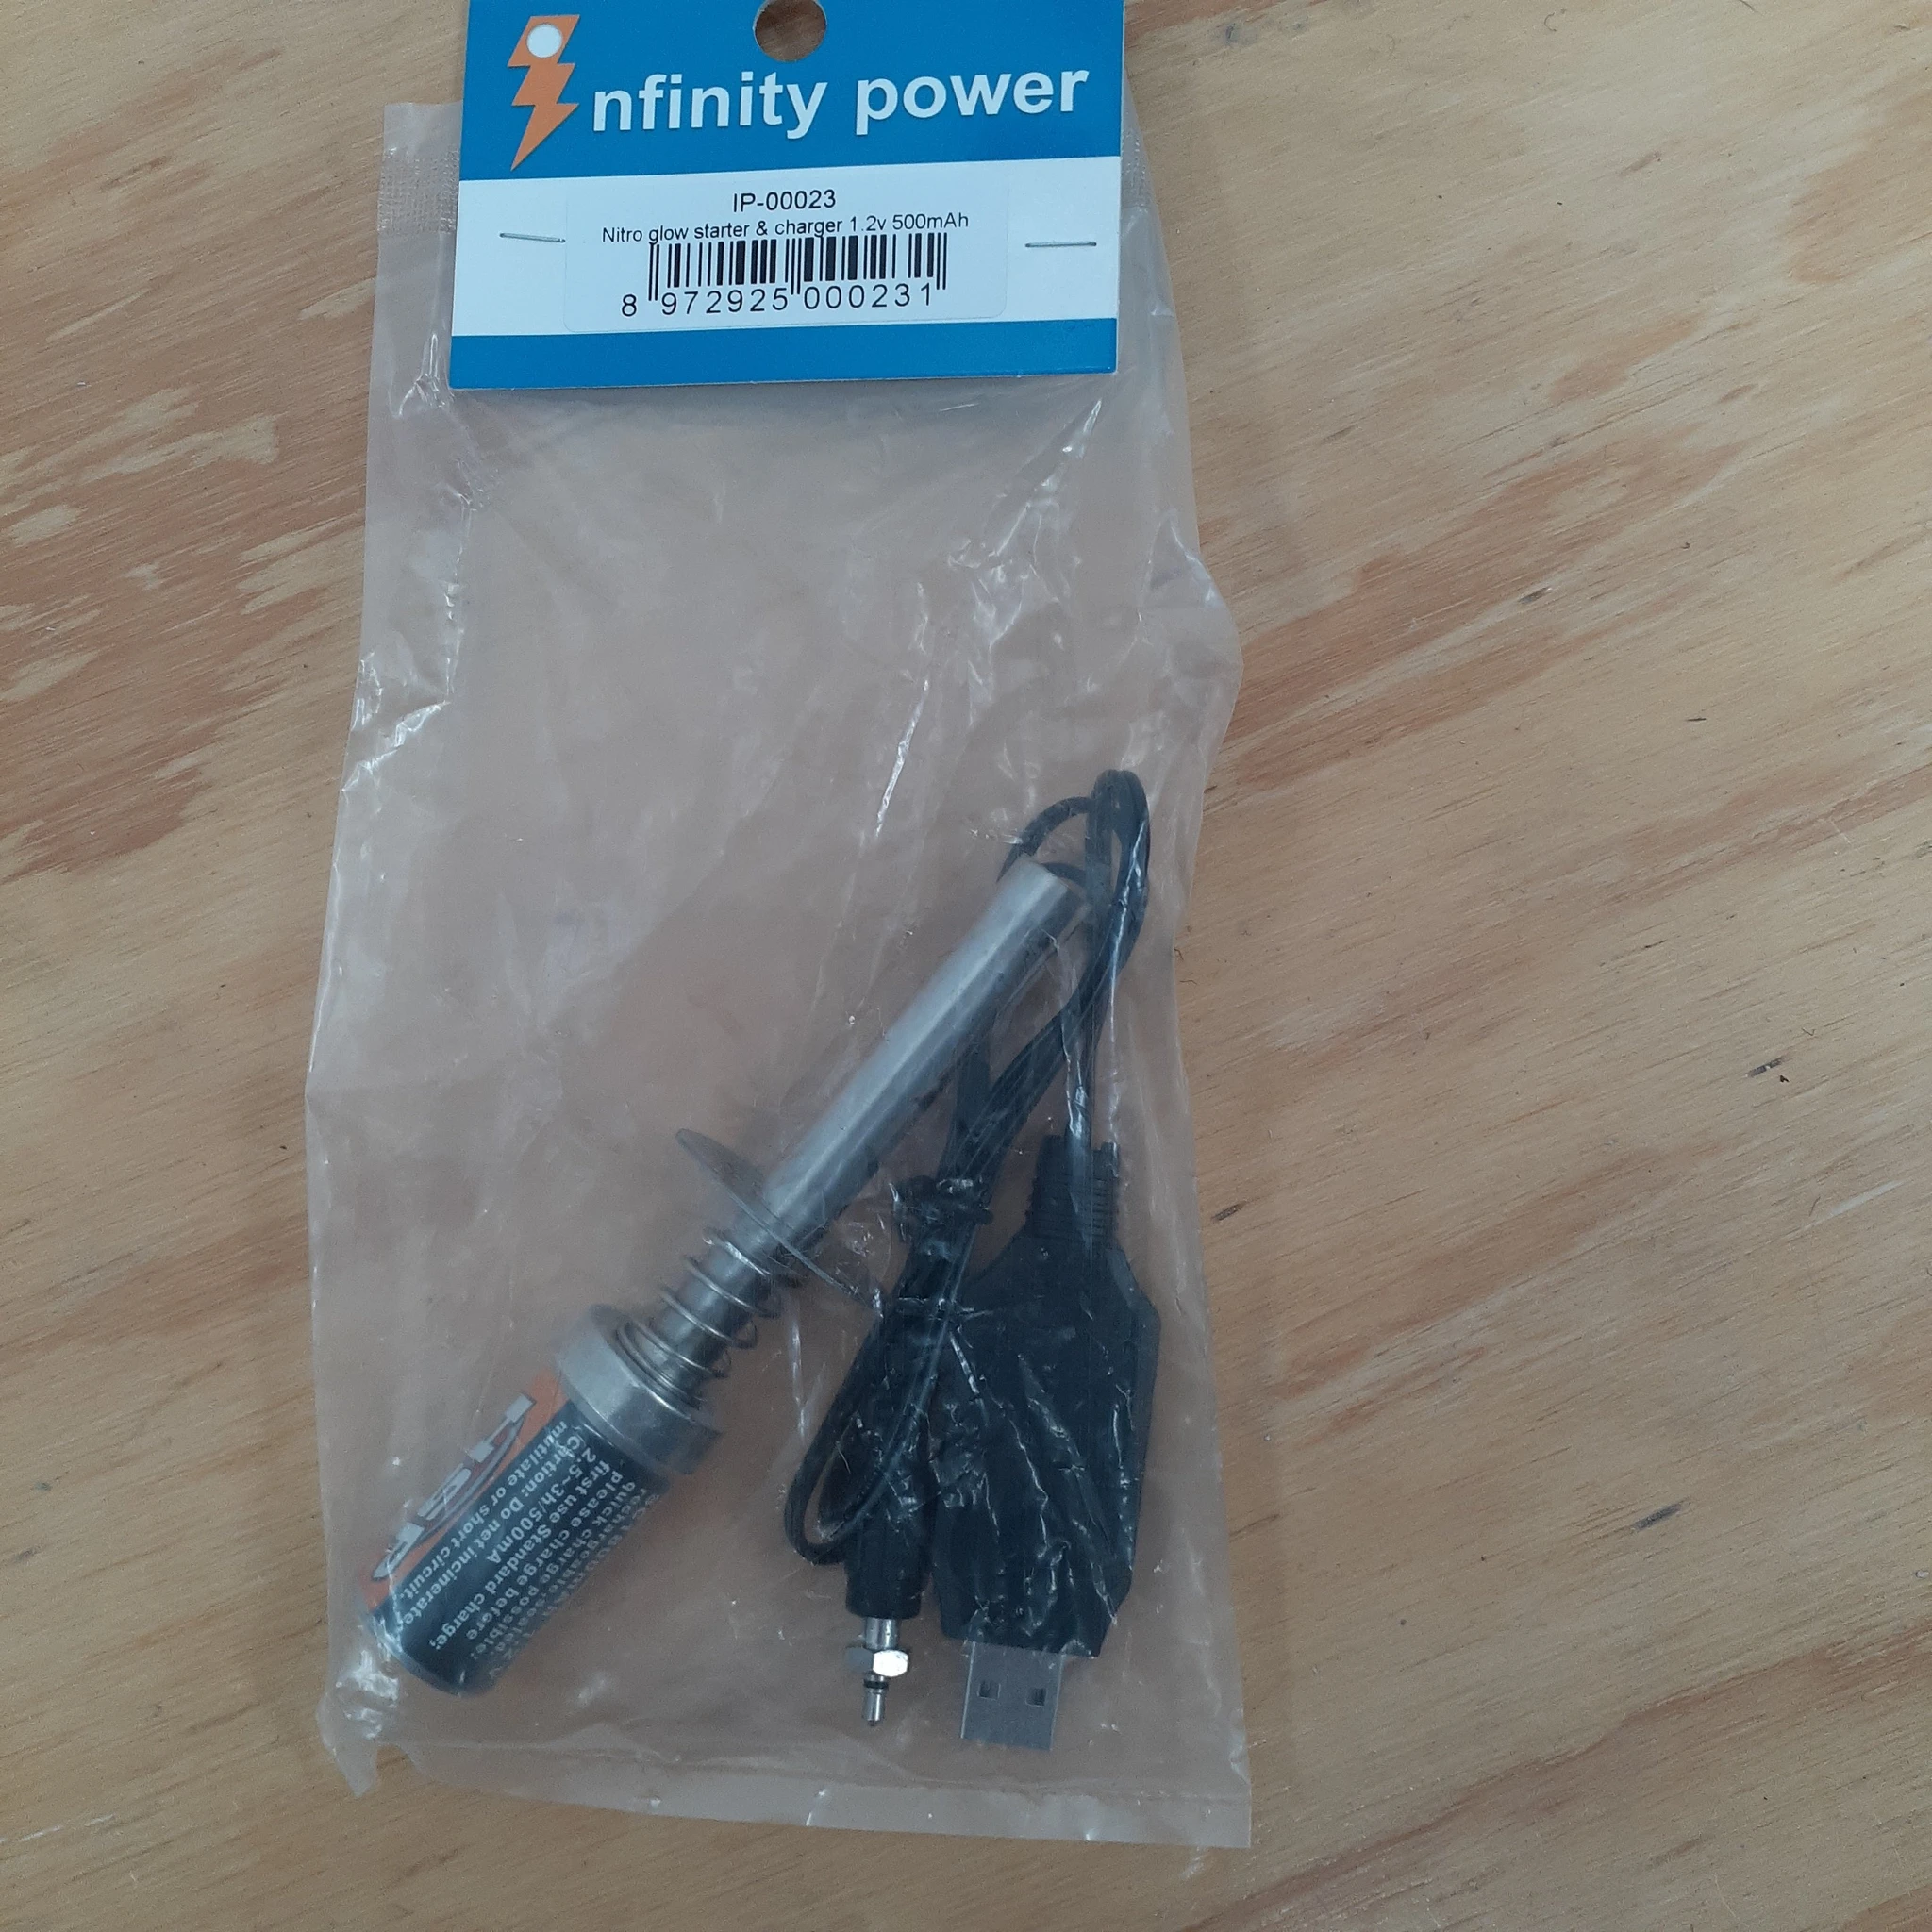 Infinity Power Nitro Glow Starter & Charger 1.2v 500mAh